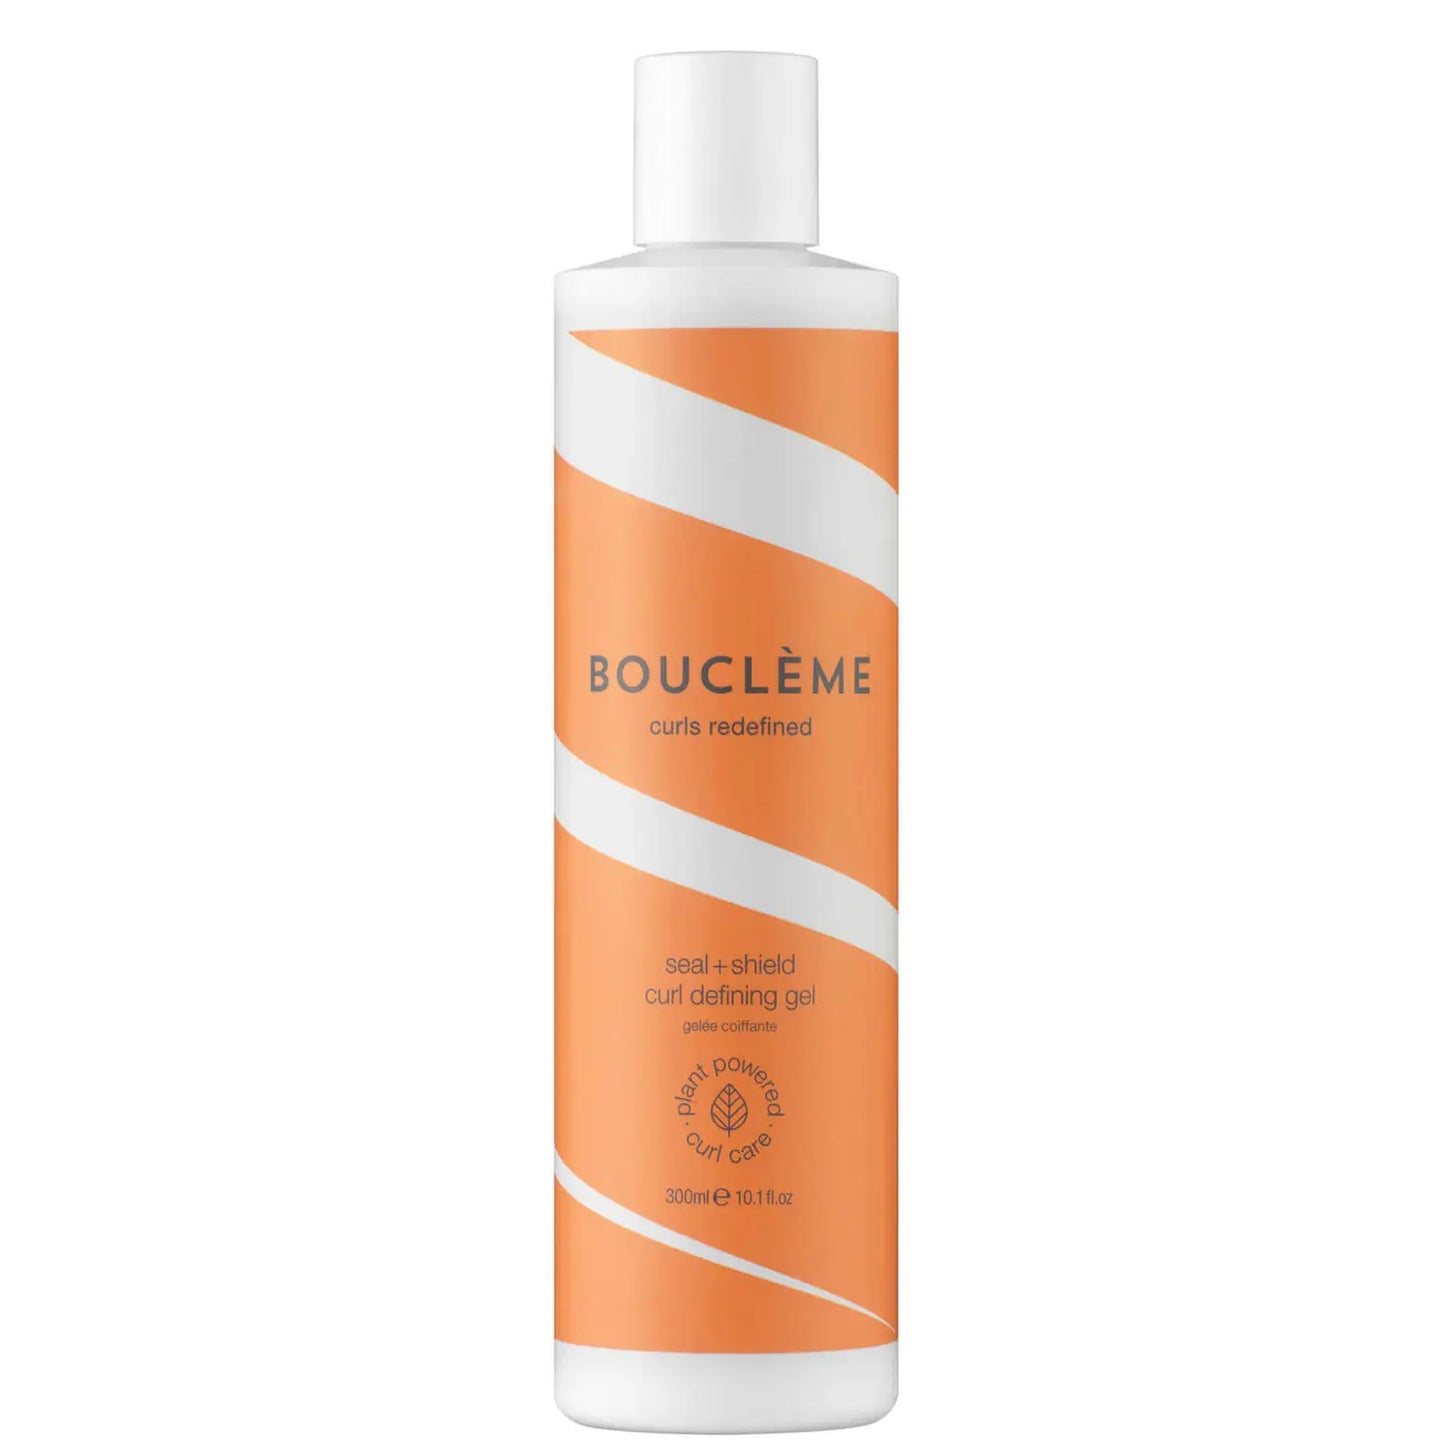 Bouclème - Seal + Shield Curl Defining Gel